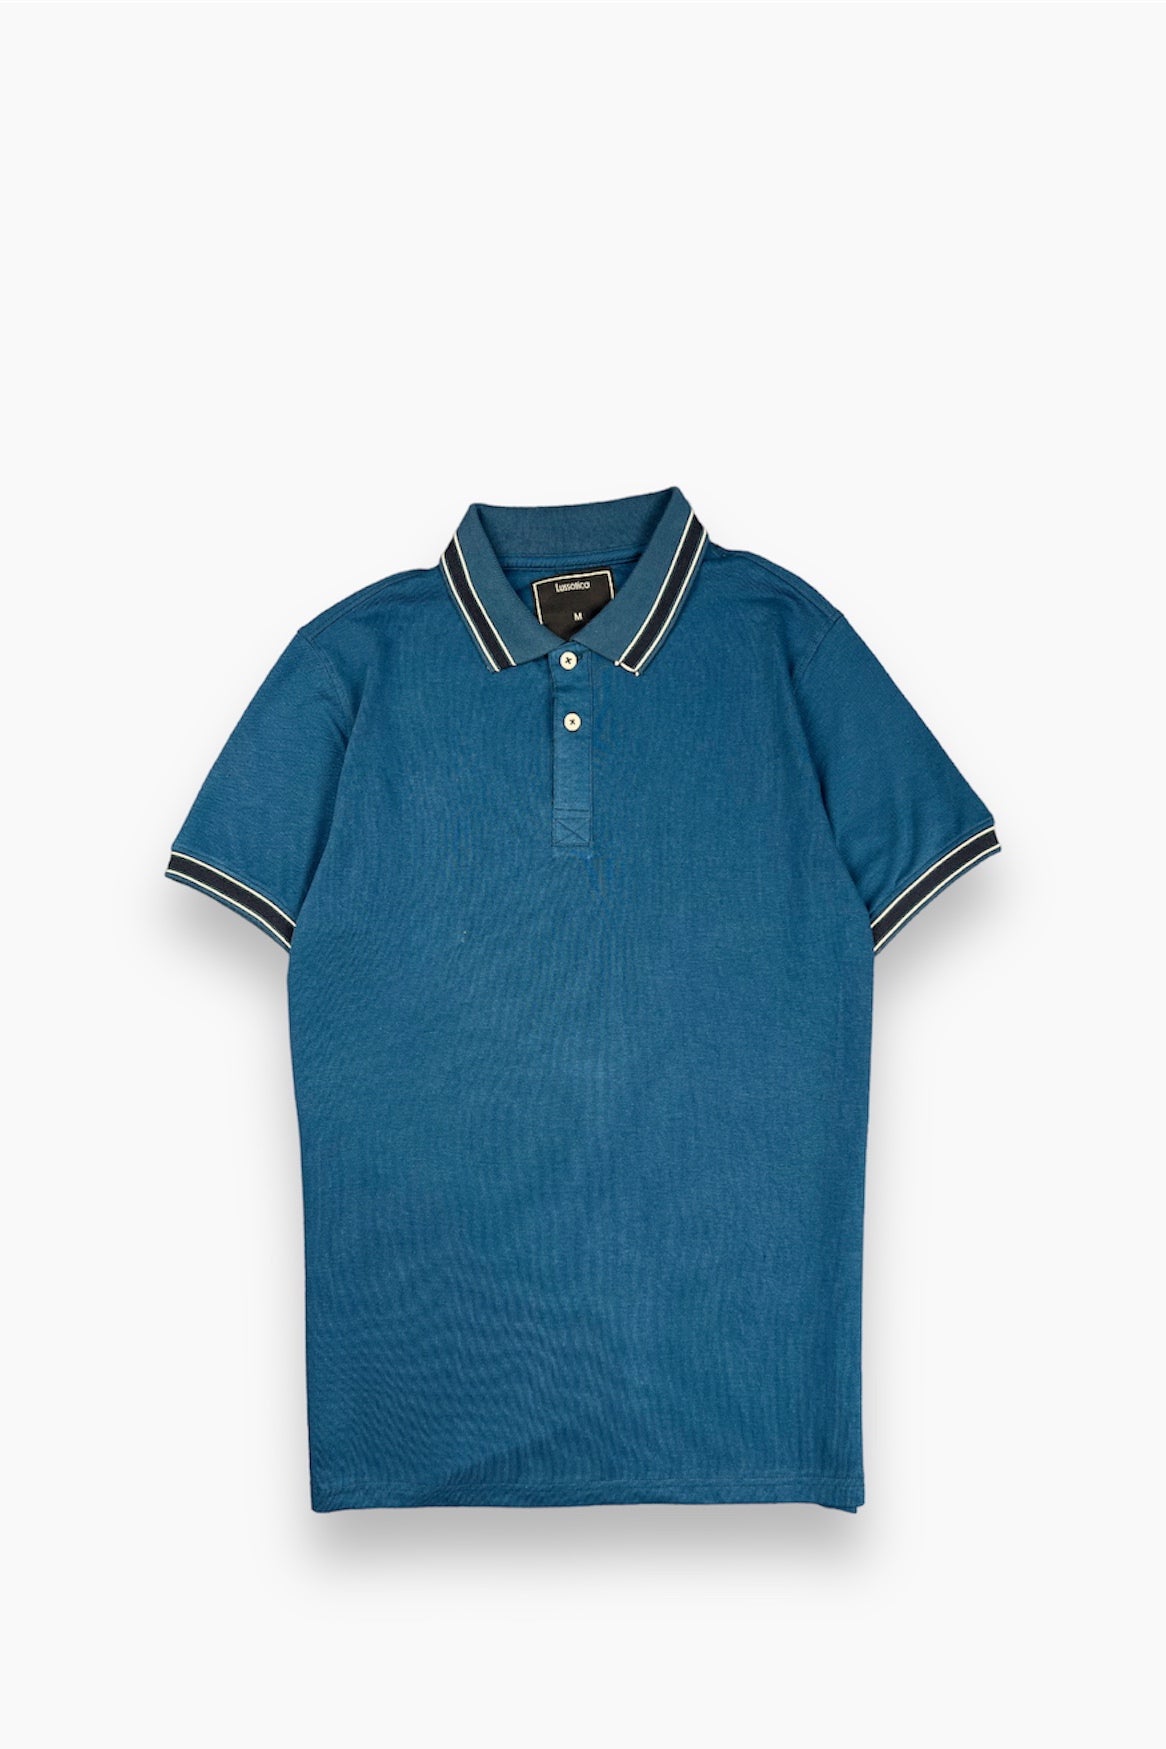 Polo Shirt by Lussotica – Ocean LU755 – Short Sleeve